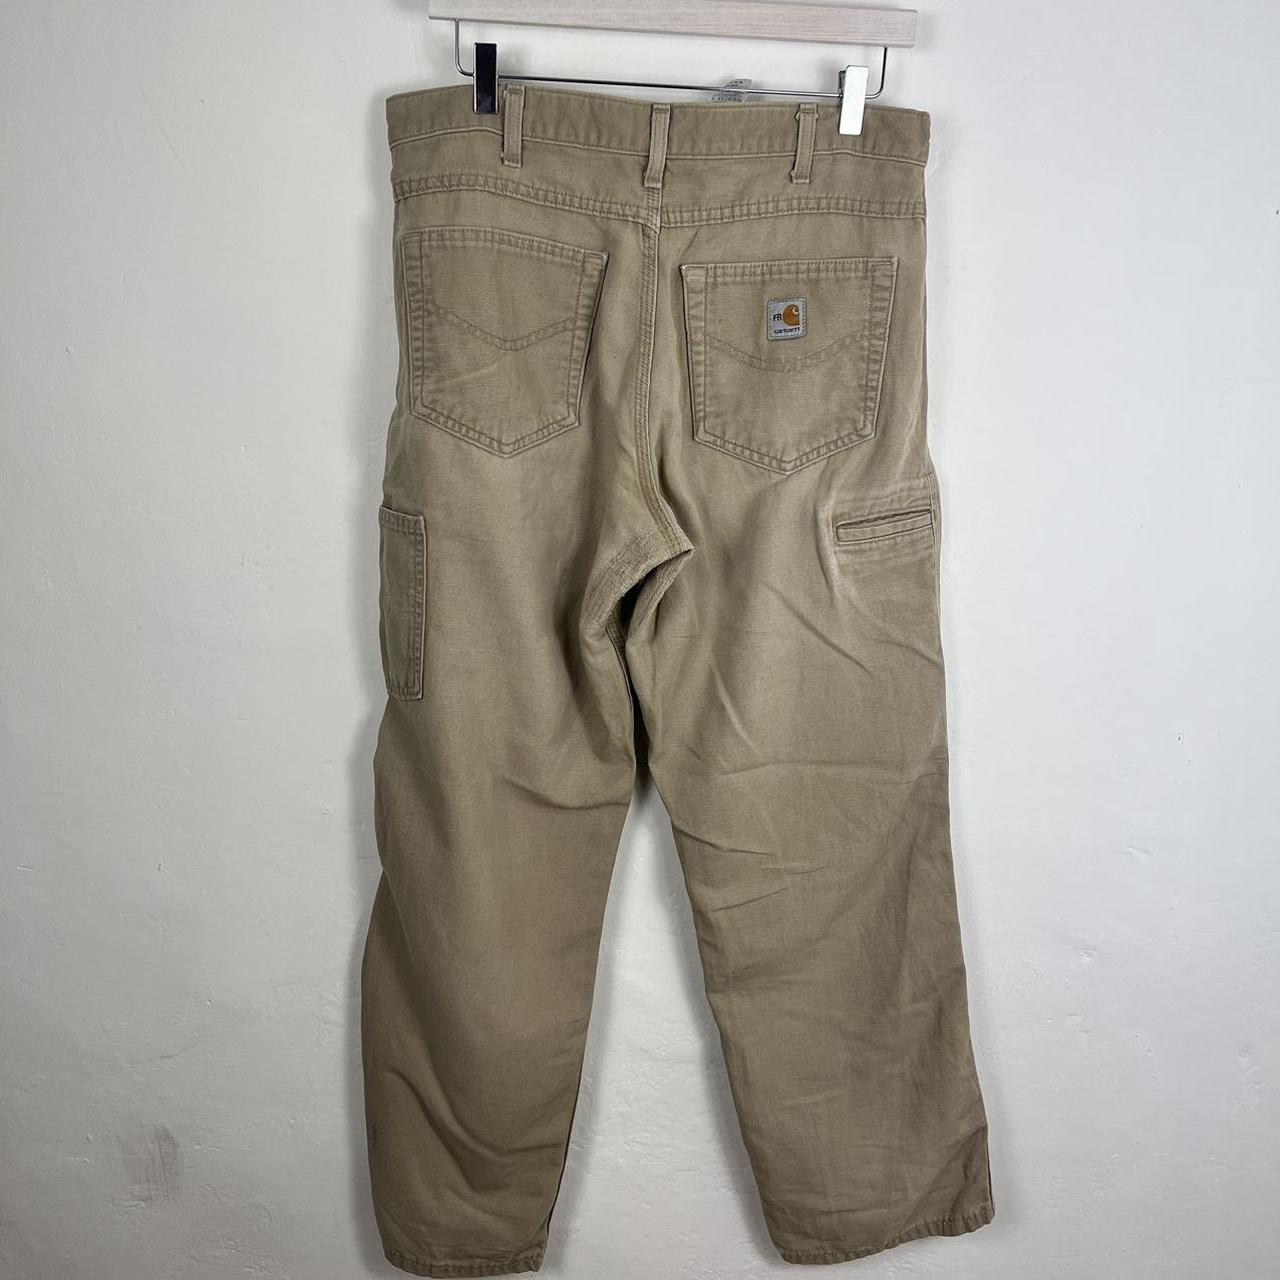 Carhartt carpenter trousers 33x30